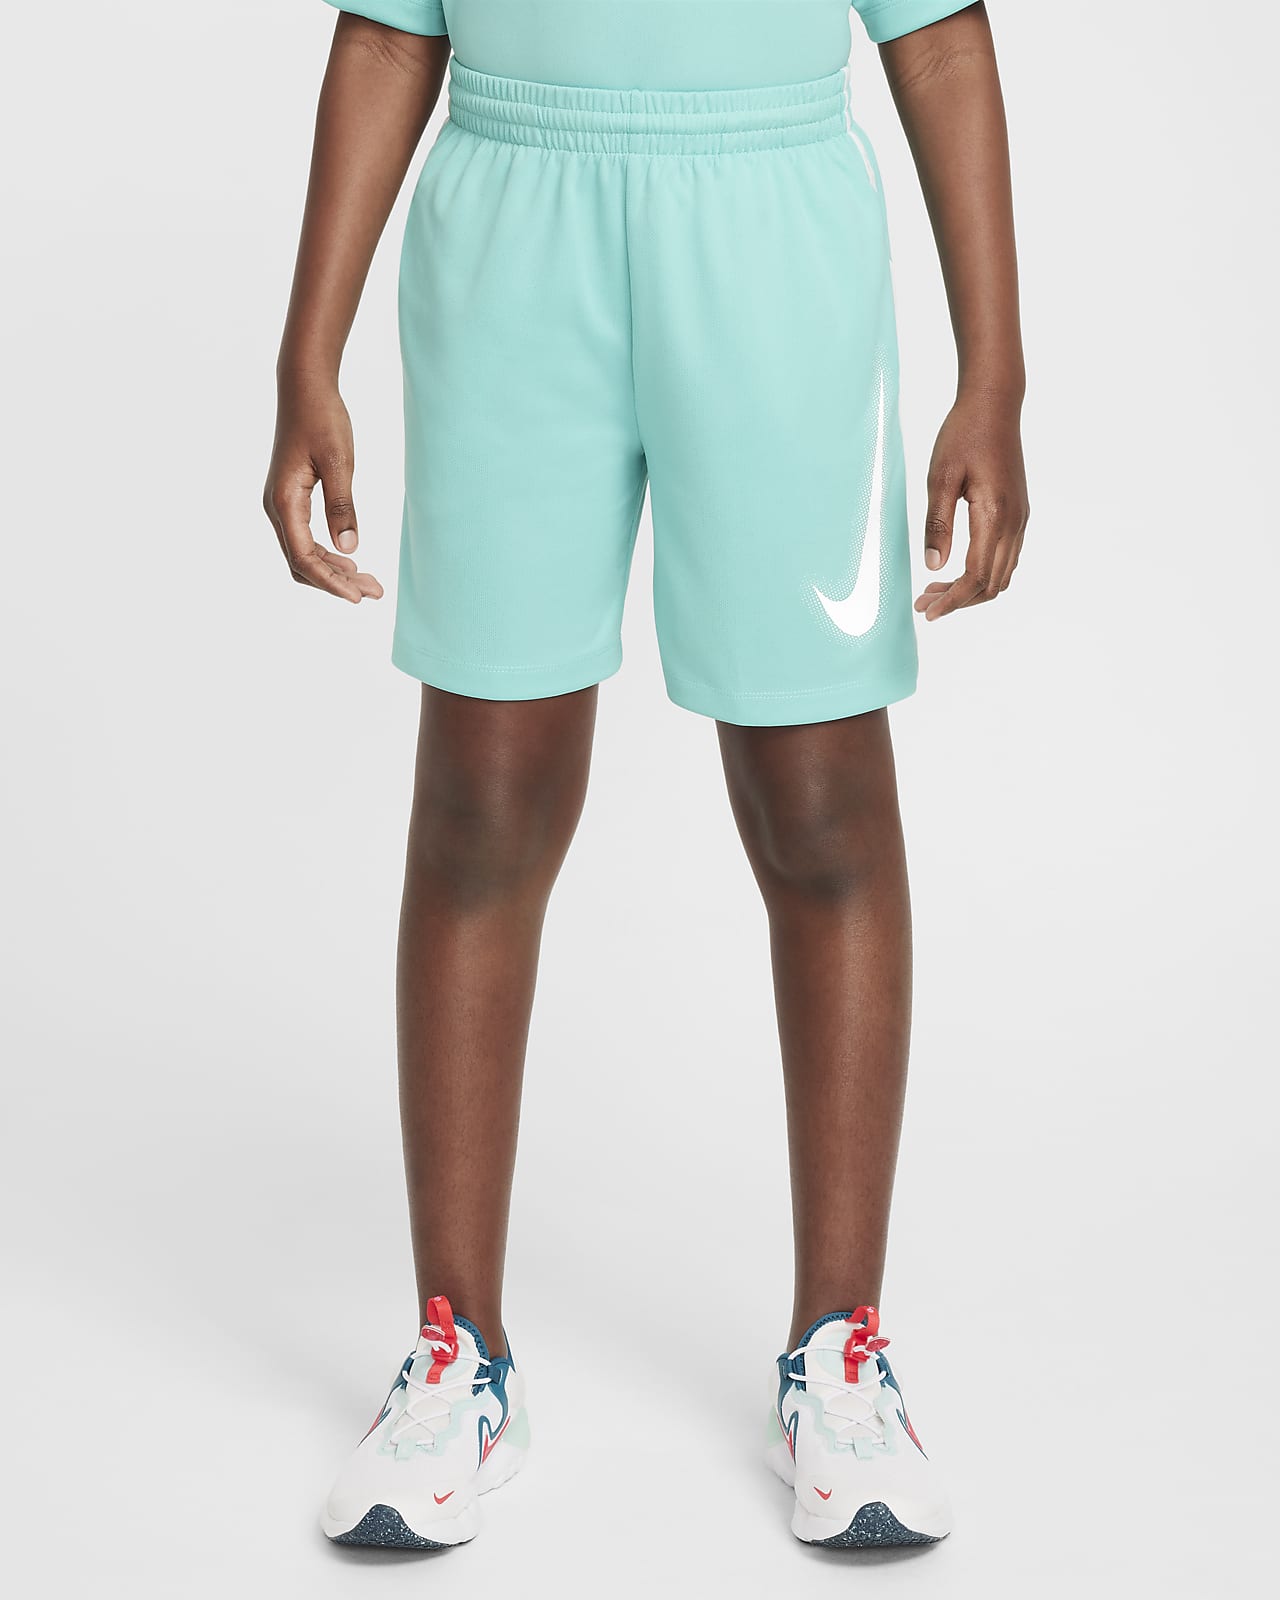 Nike Multi Older Kids' (Boys') Dri-FIT Graphic Training Shorts